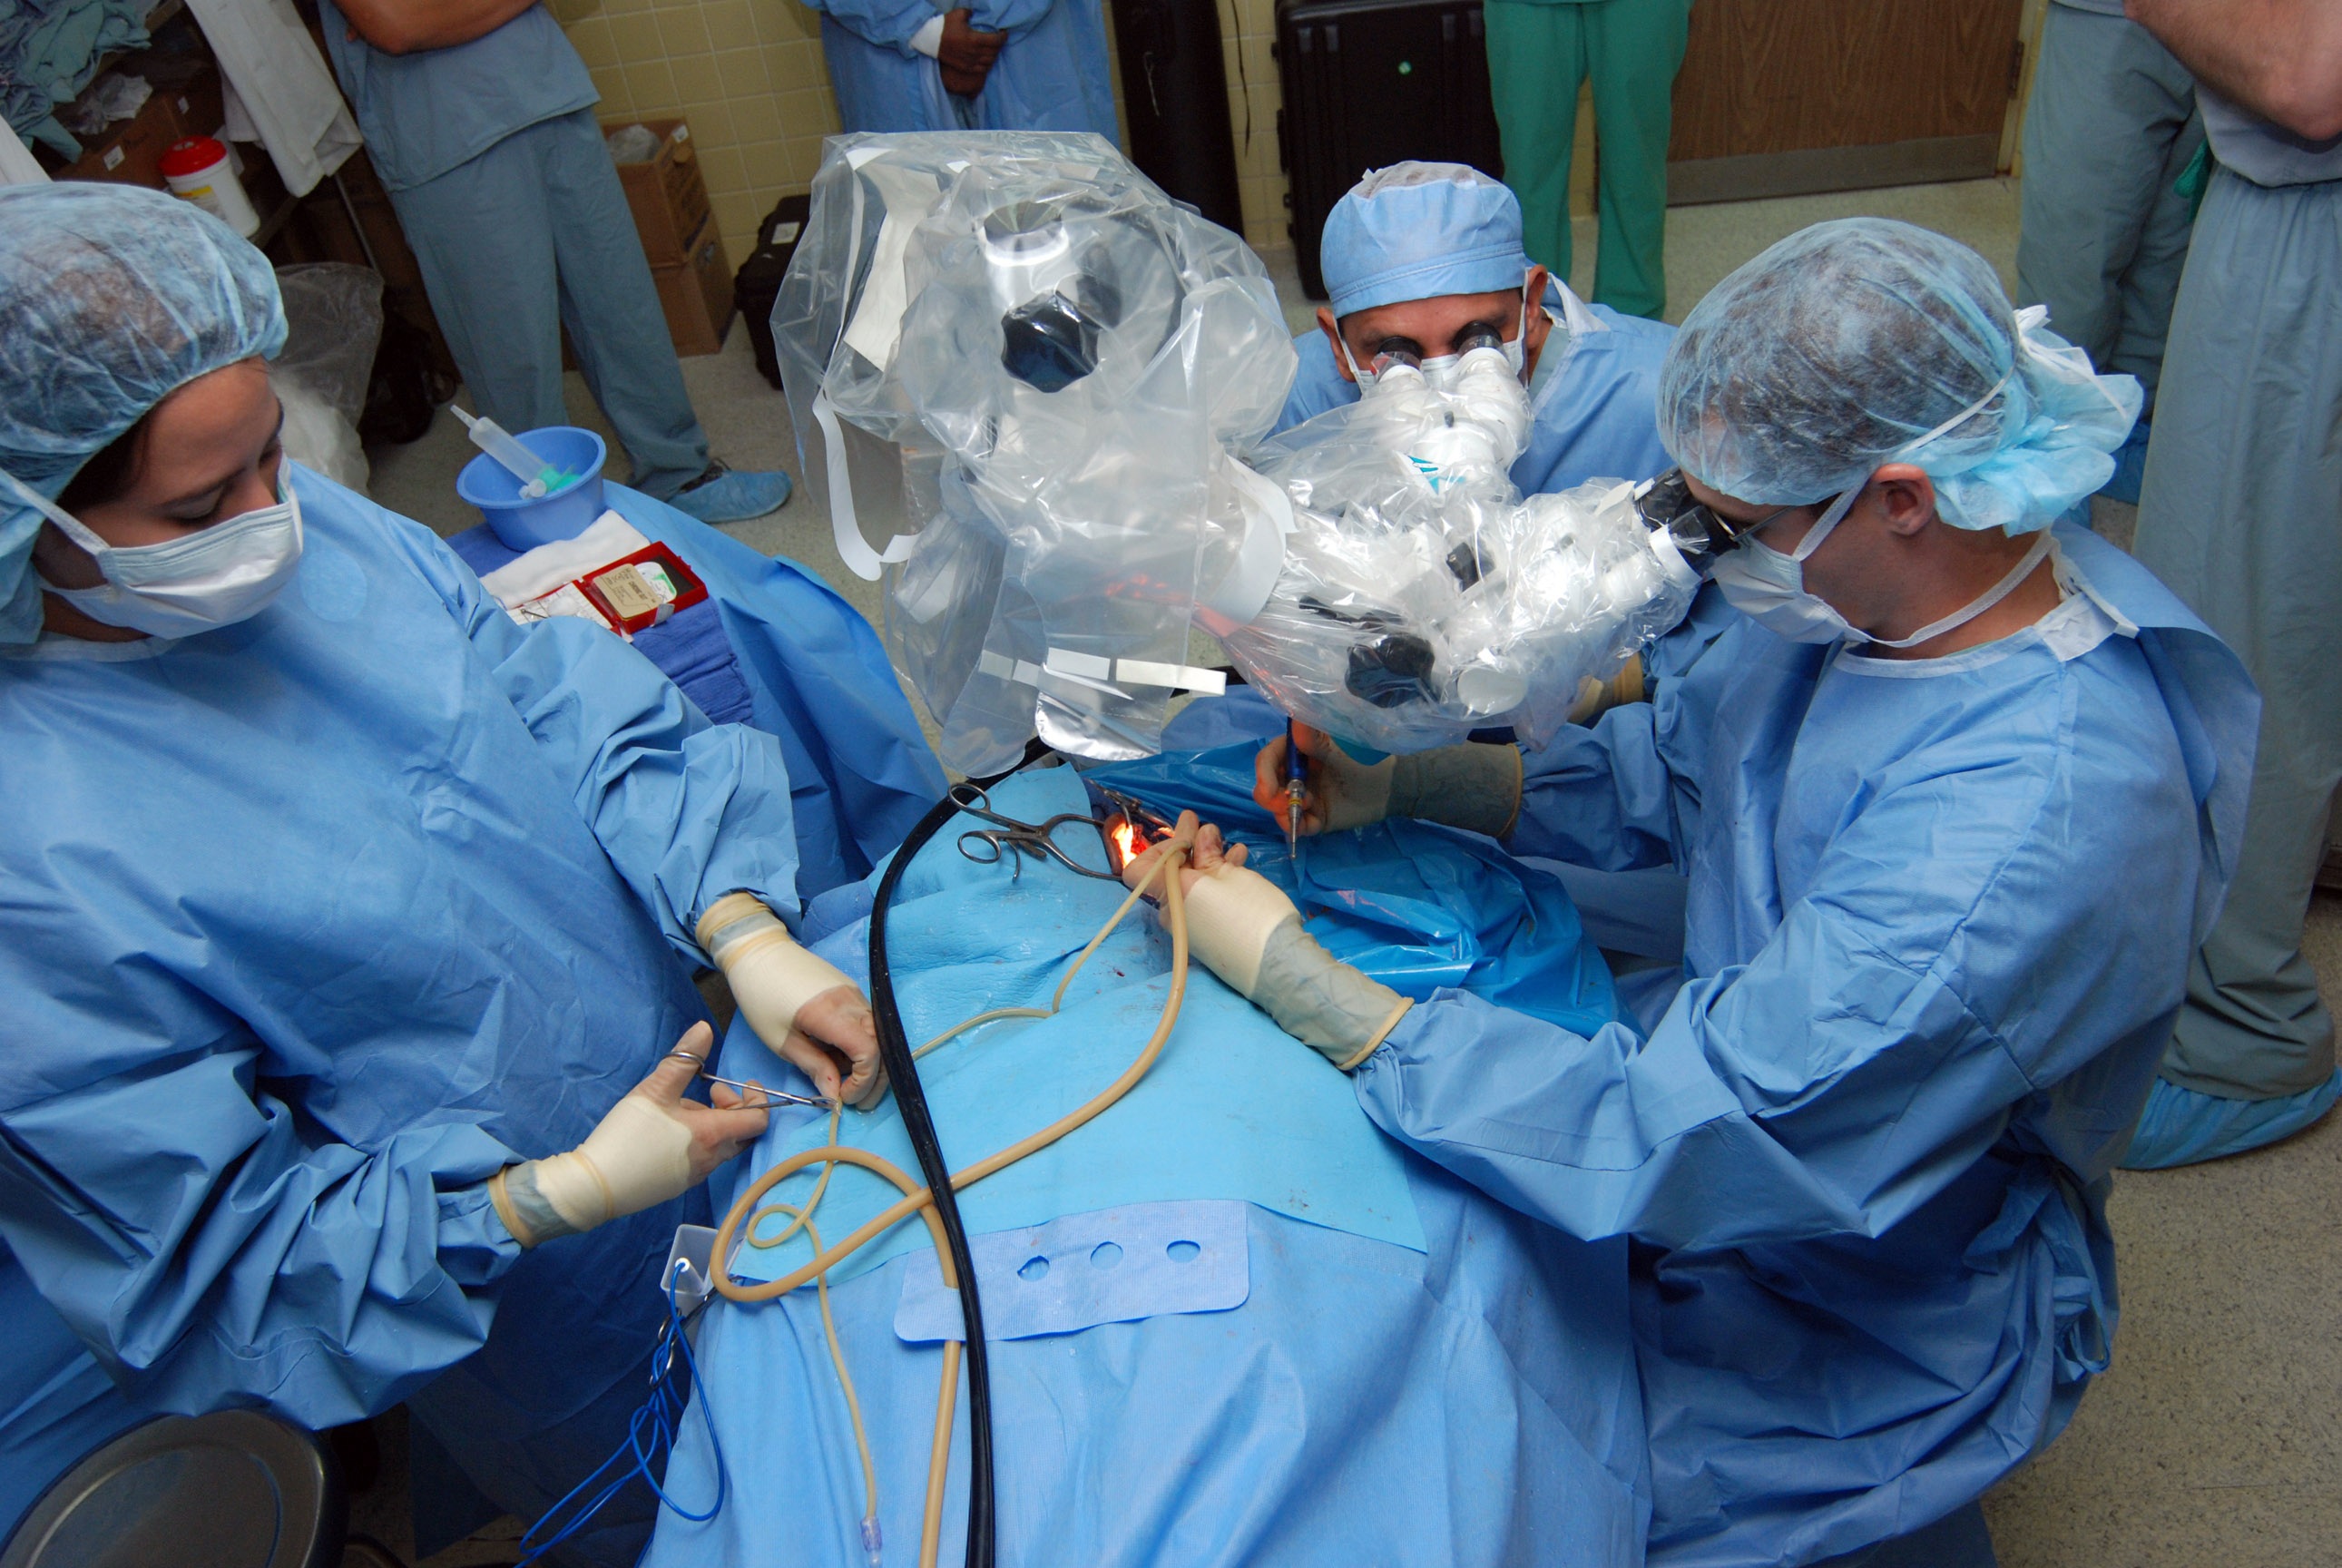 Surgeons Operating, Activity, Doctor, Hospital, Medical, HQ Photo